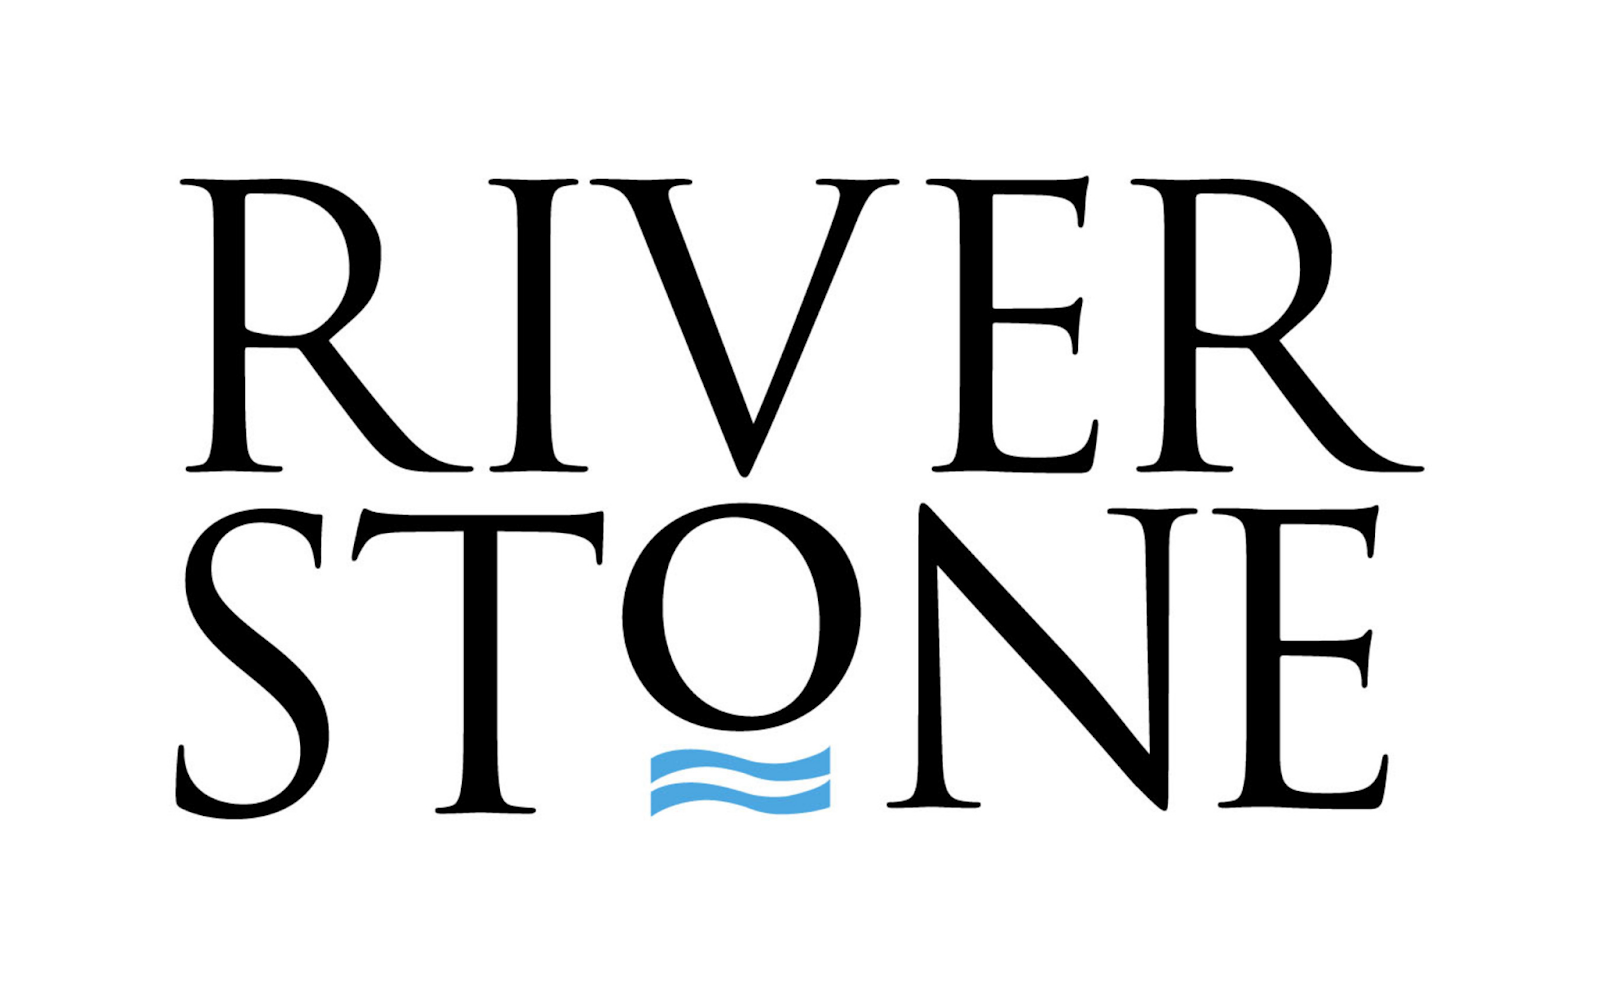 Riverstone Holdings logo